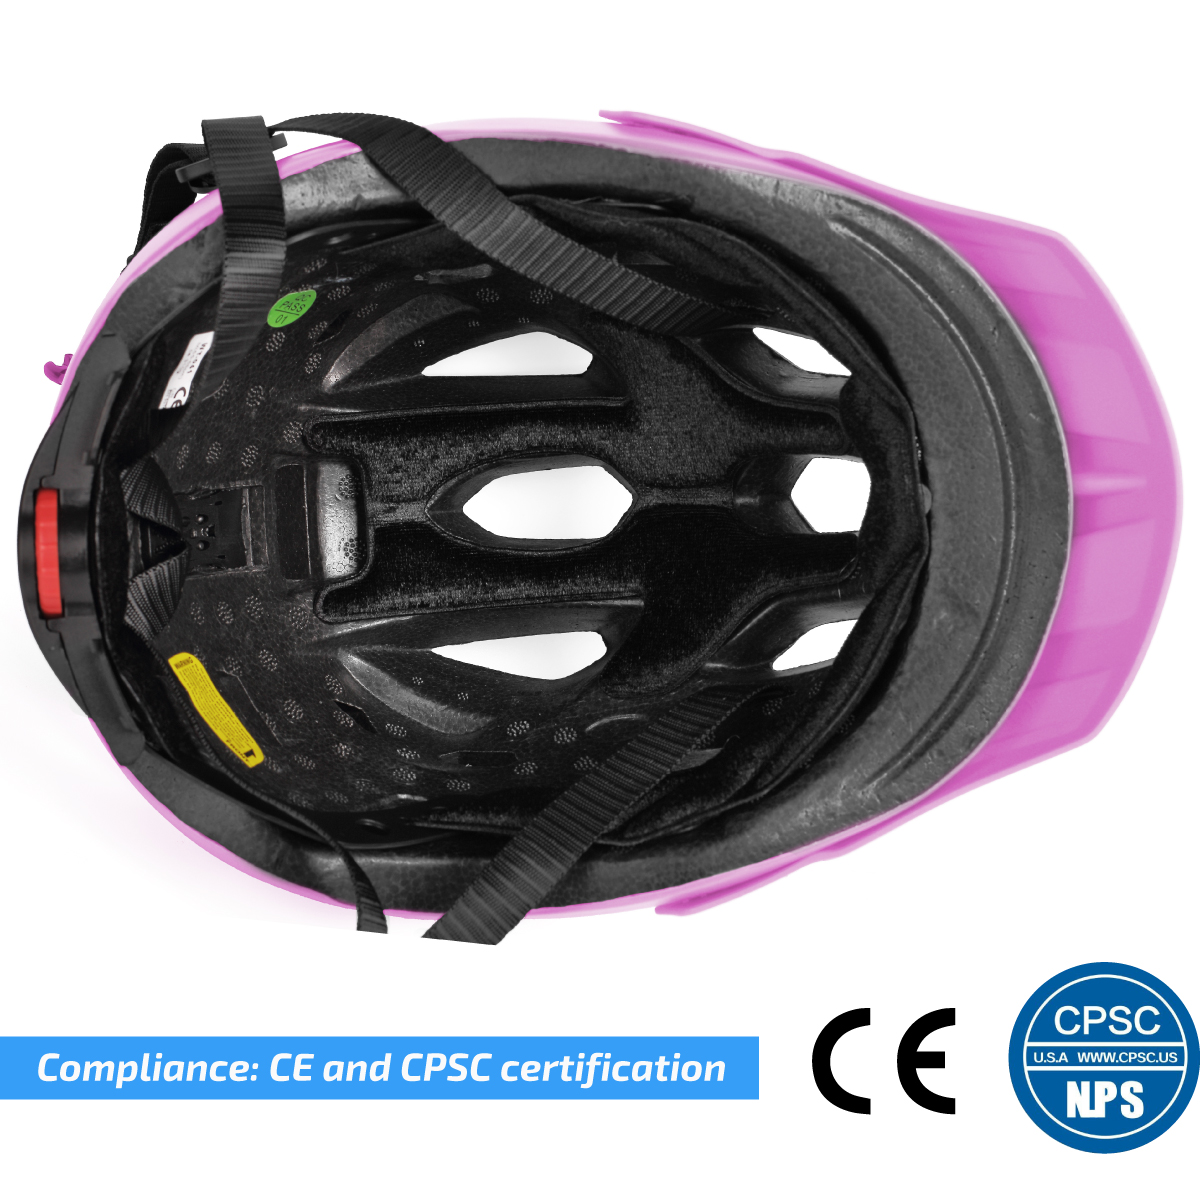 M Merkapa Bike Helmet Bicycle Helmet with Safe Taillight and Detachable Stick Visor, Suitable for Adult Men Women Boys Girls to Cycling Road Biking